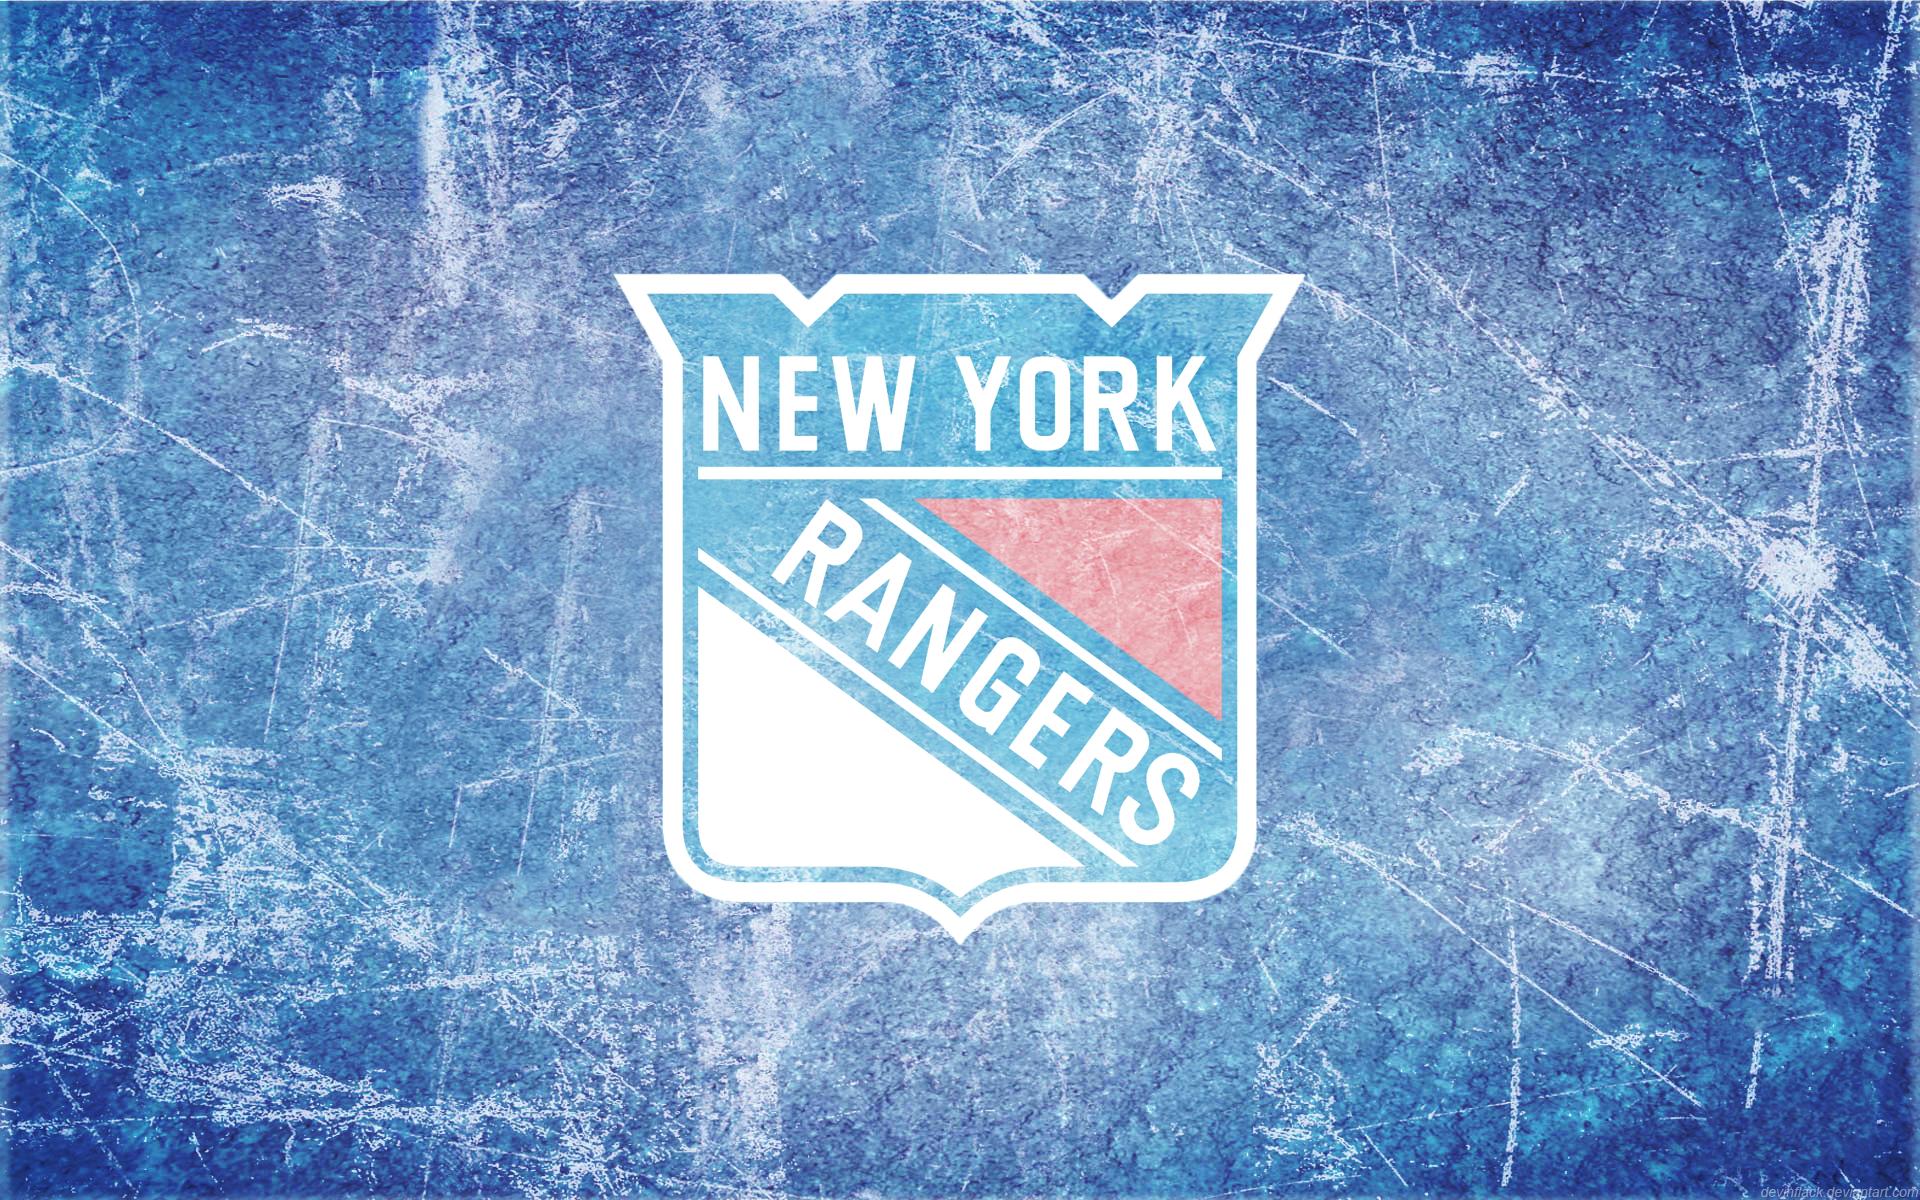 NEW YORK RANGERS hockey nhl (25) wallpaper, 3000x2000, 359518